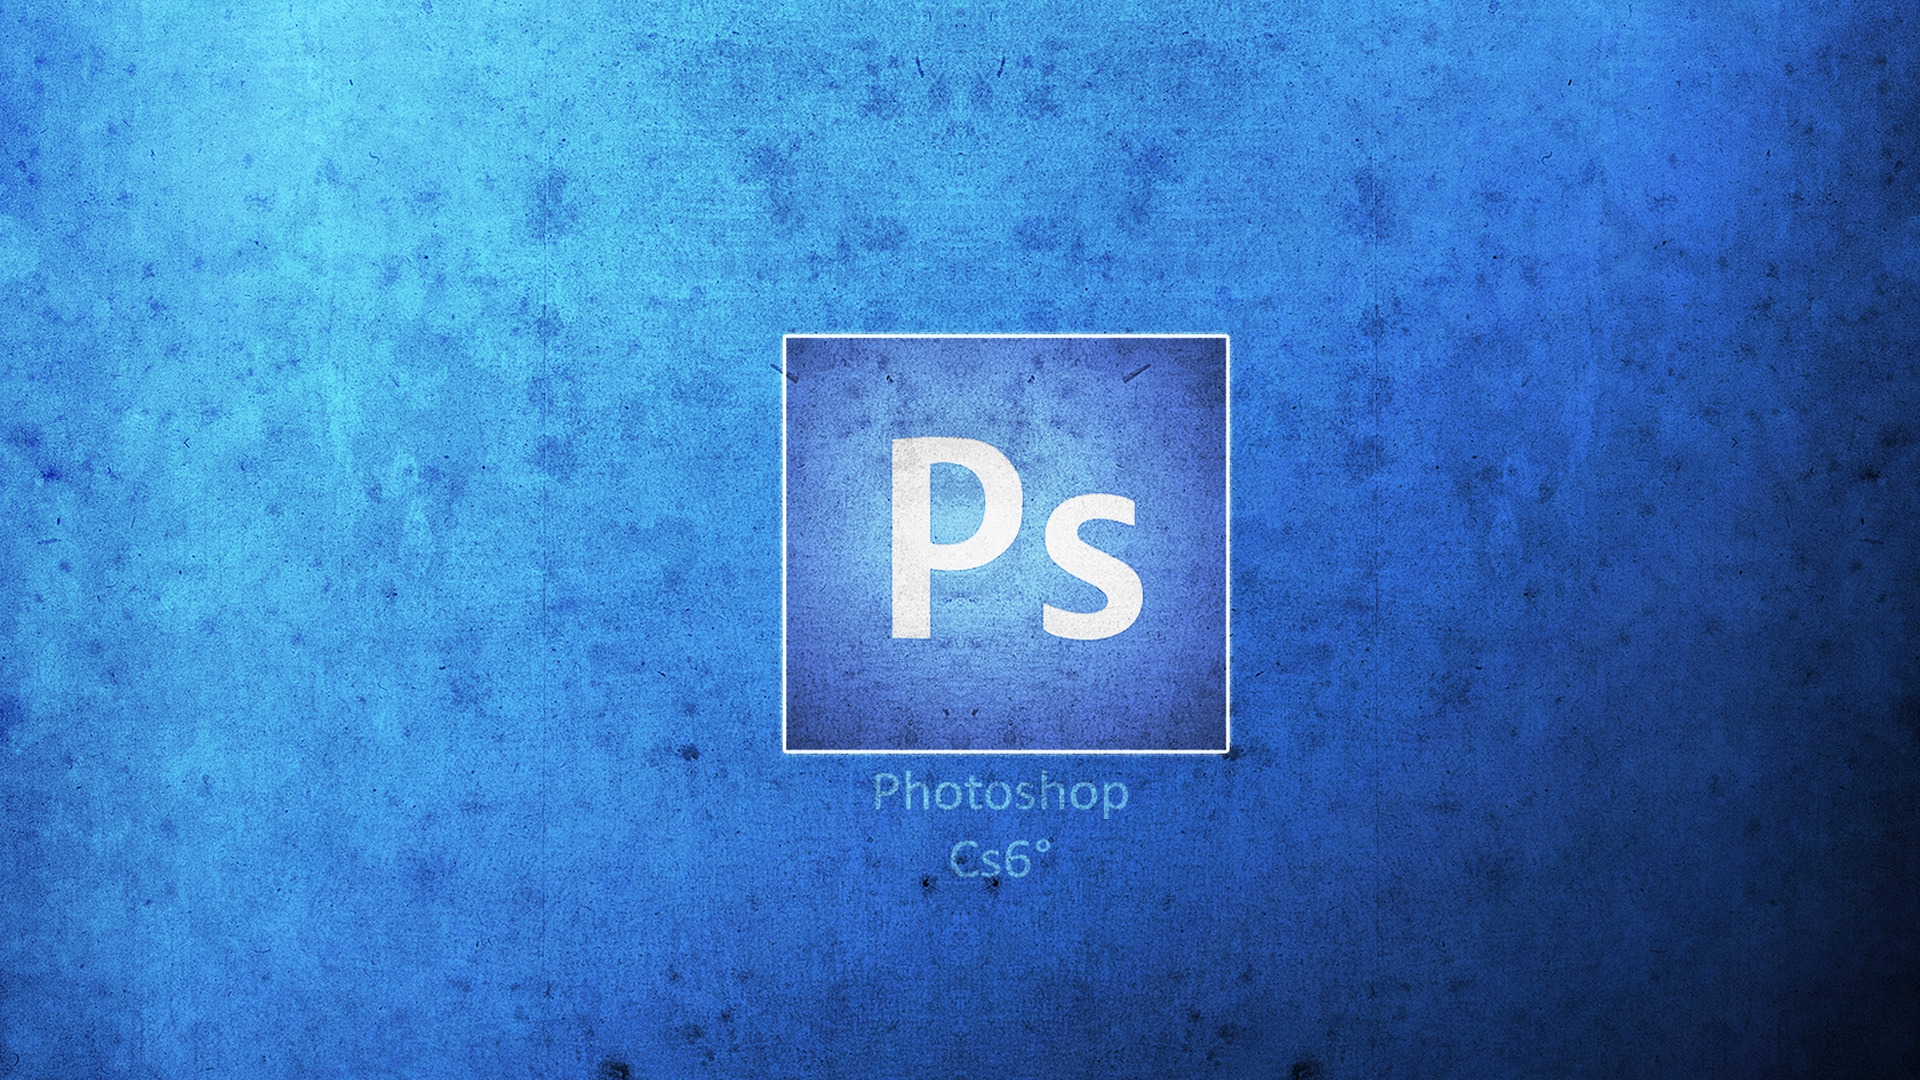 Photoshop CS6 Logo for 1920 x 1080 HDTV 1080p resolution